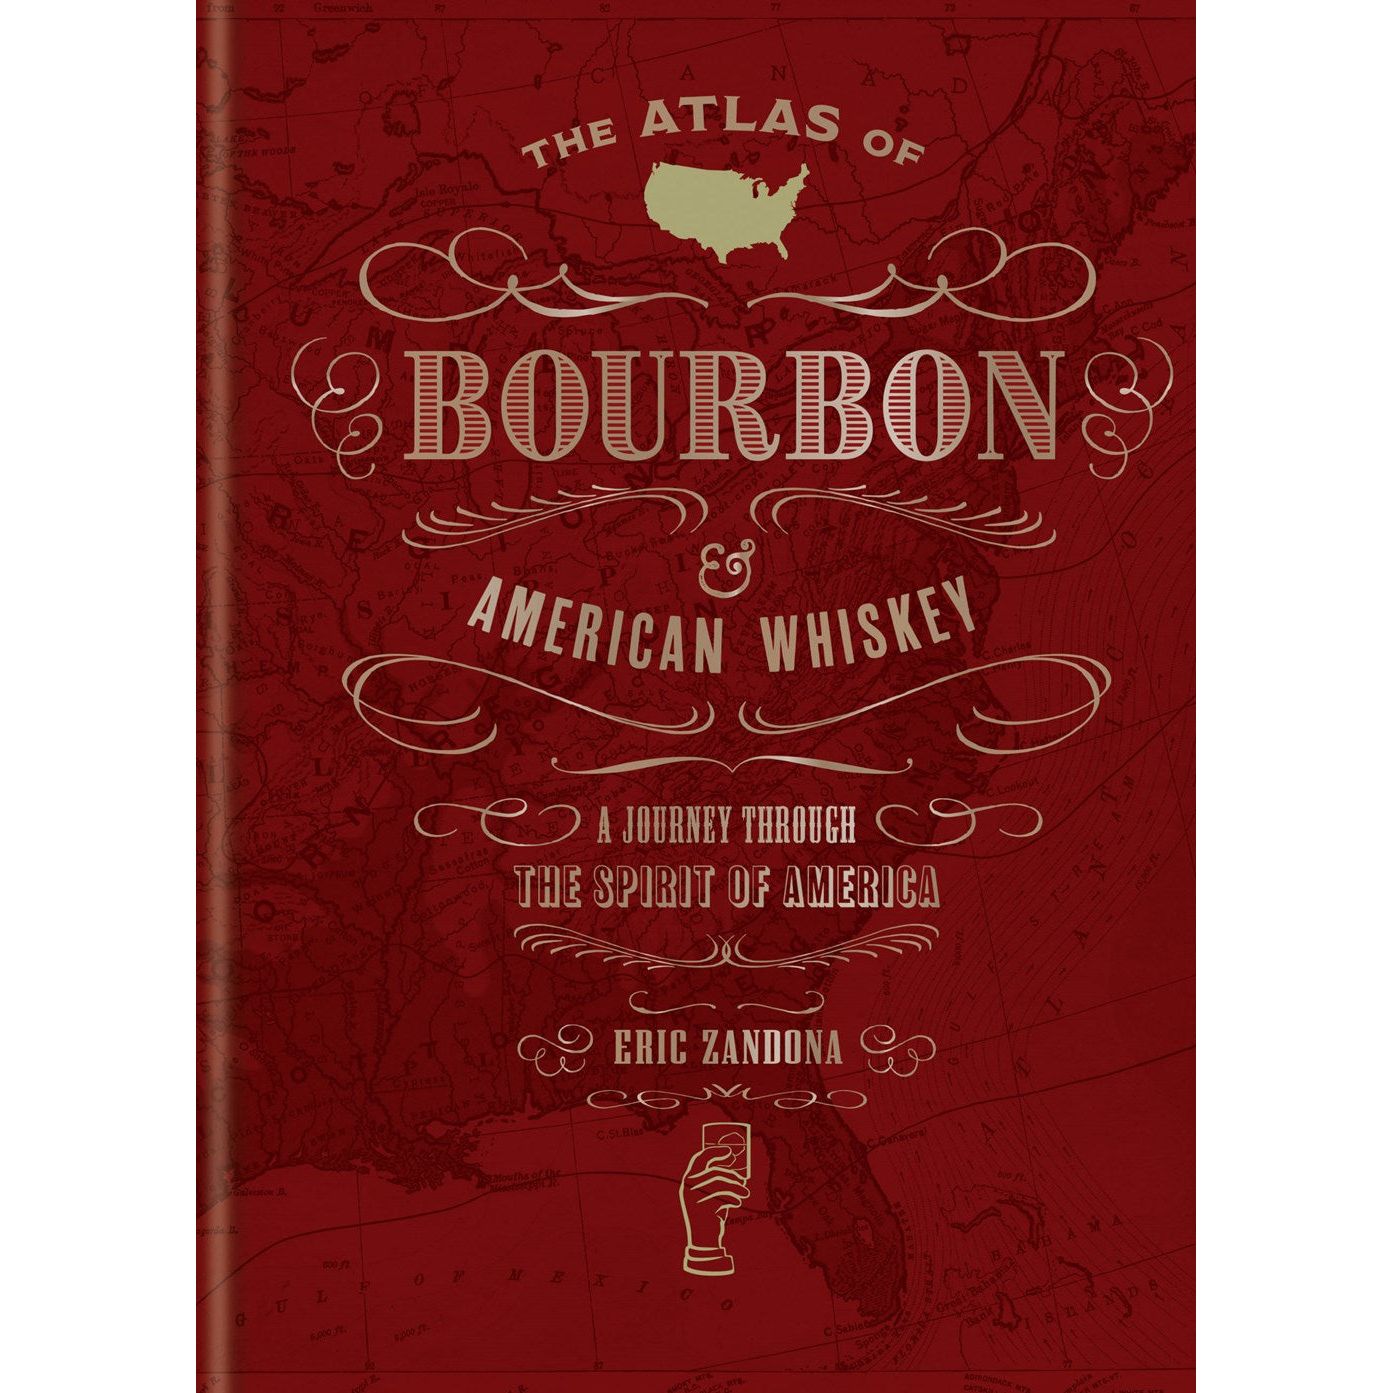 The Atlas of Bourbon and American Whiskey (Eric Zandona)